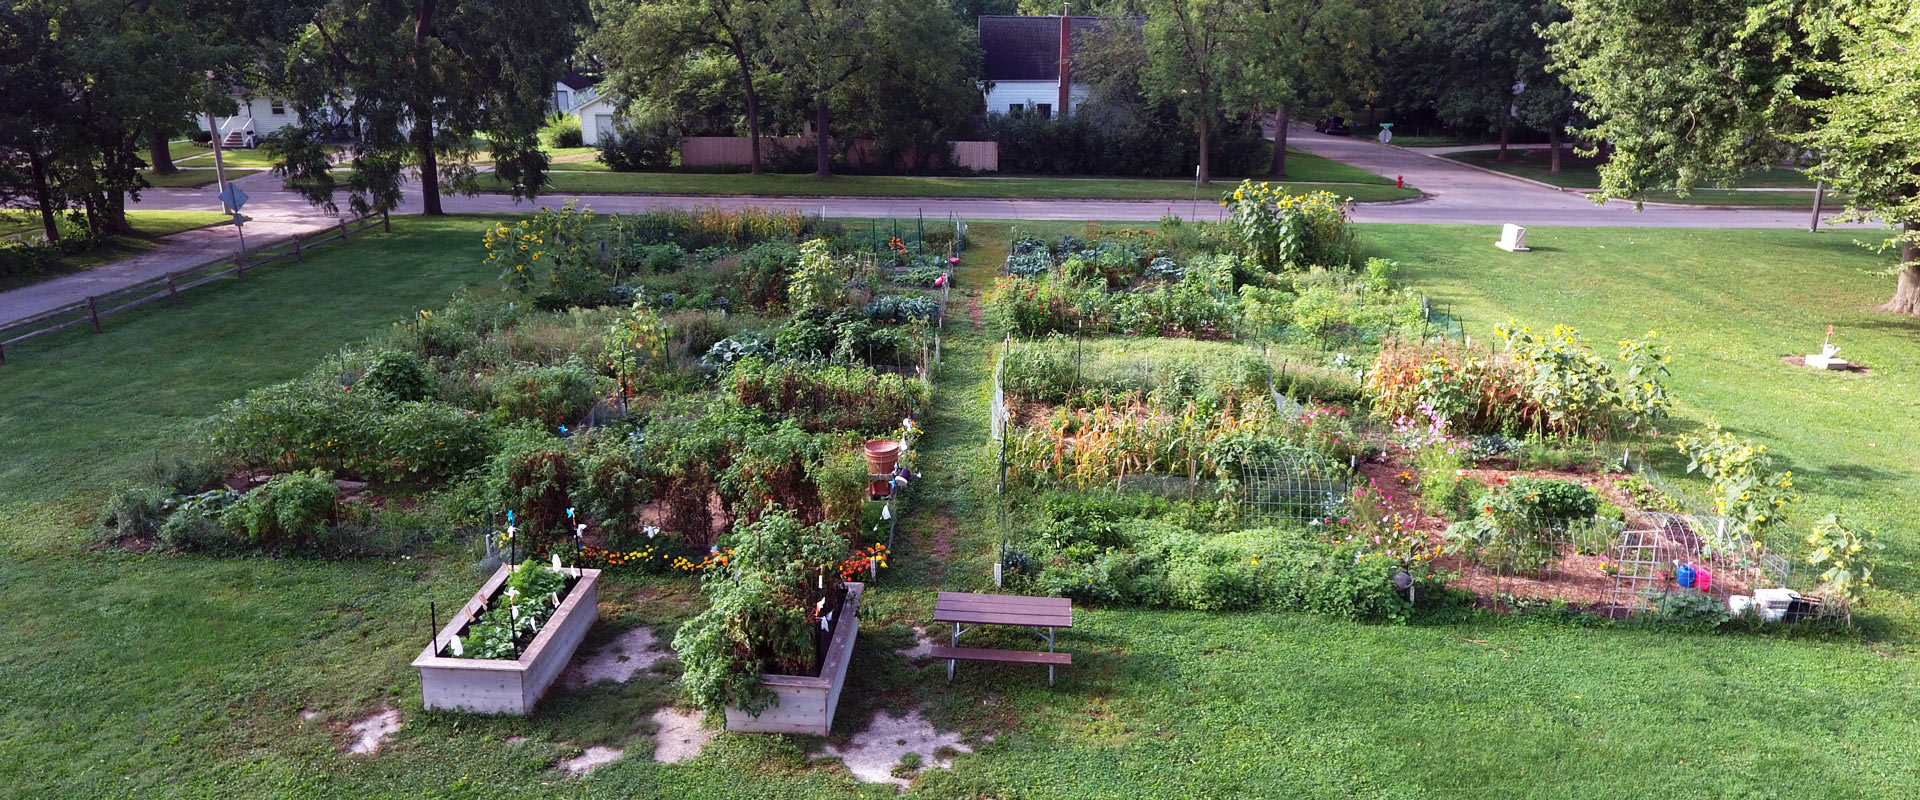 Community Garden in Iowa City